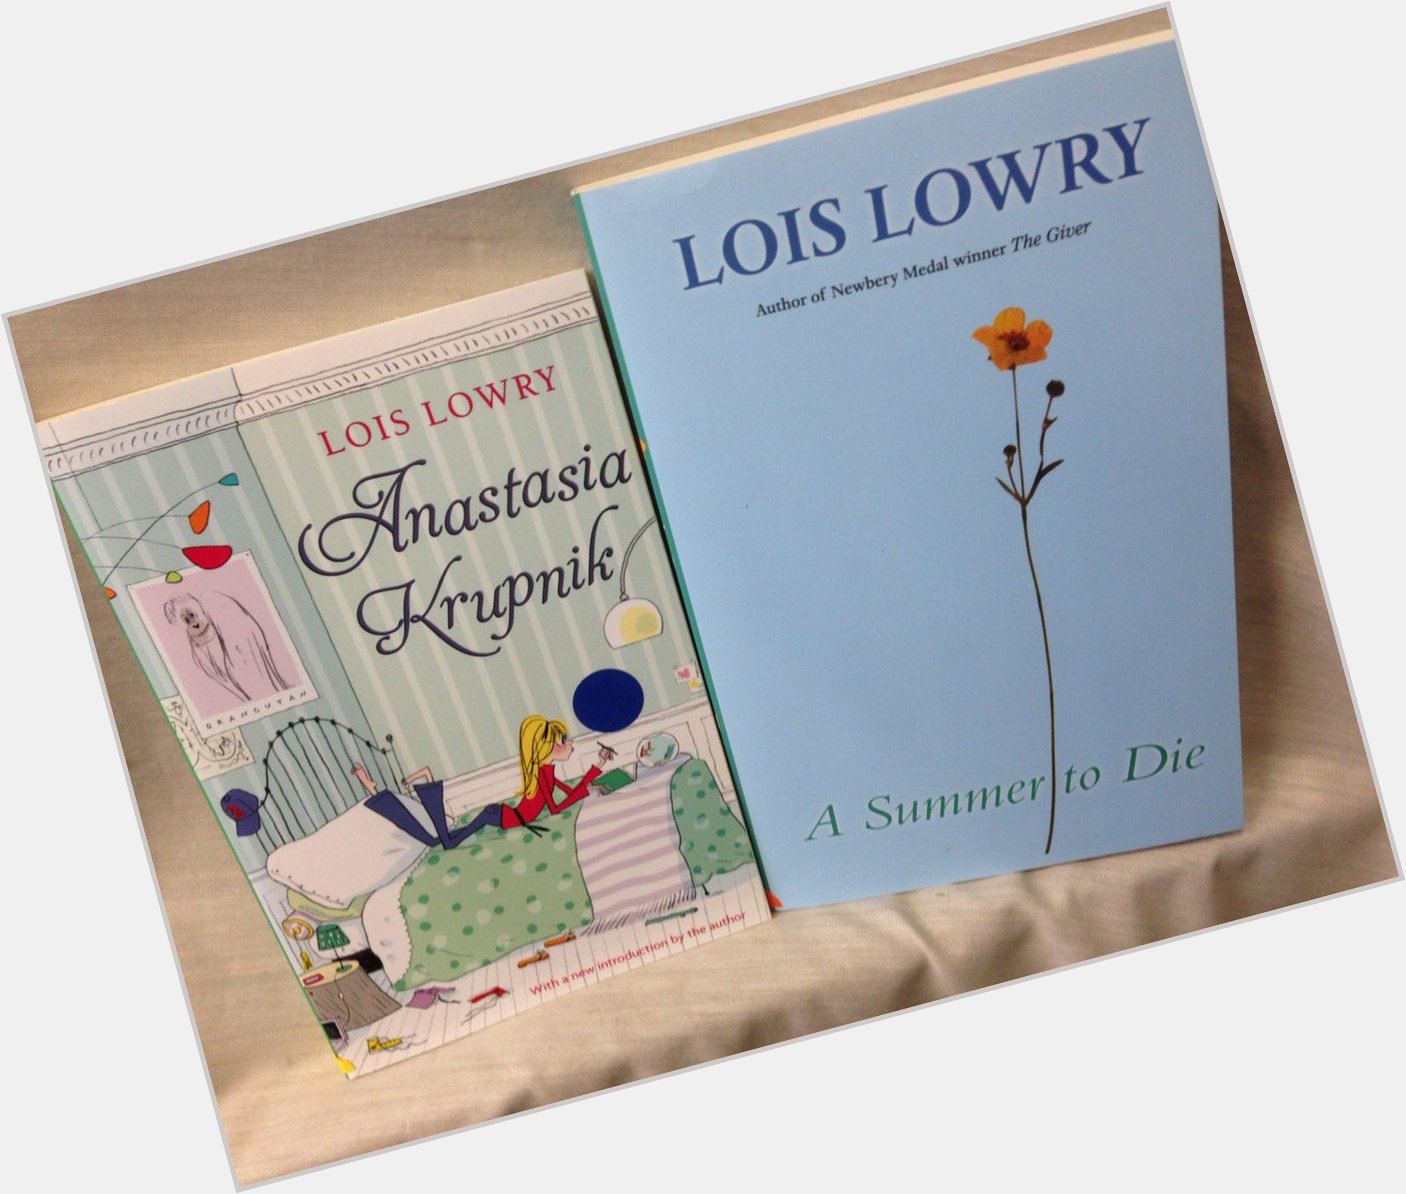 Happy Birthday Lois Lowry! Thank you for providing many happy hours of reading! 